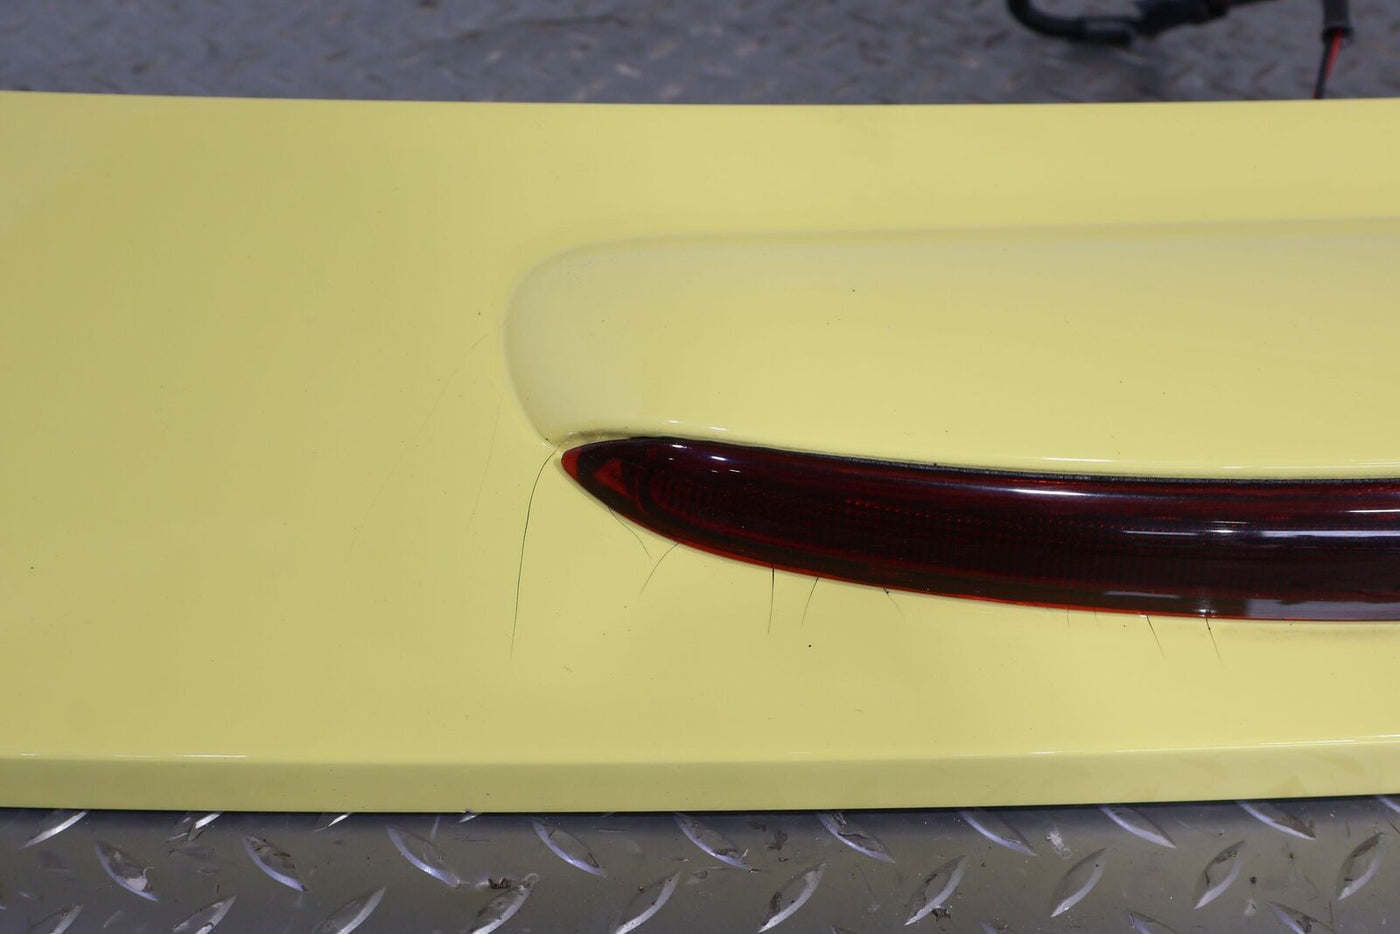 02-05 Ford Thunderbird LED 3RD Brake Light W/Surround (Inspiration Yellow)Tested